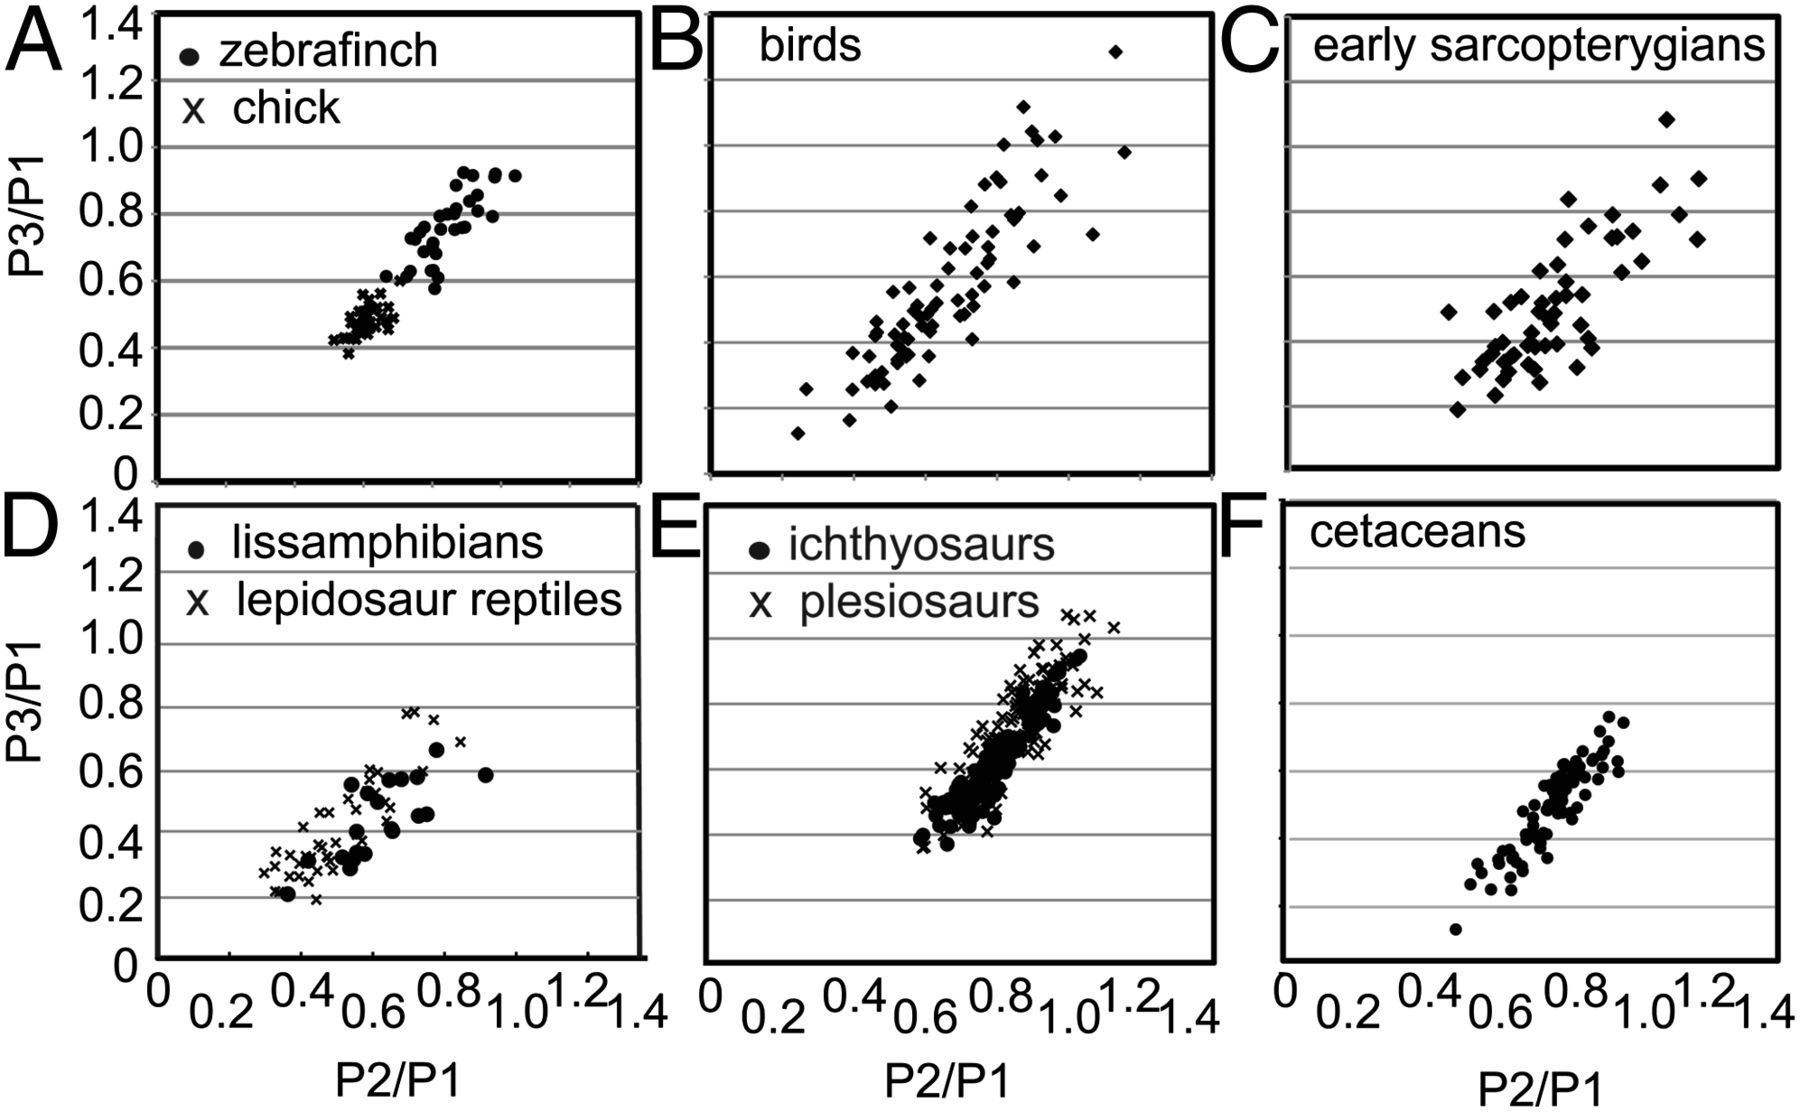 phalange morphospaces for six vertebrate taxa